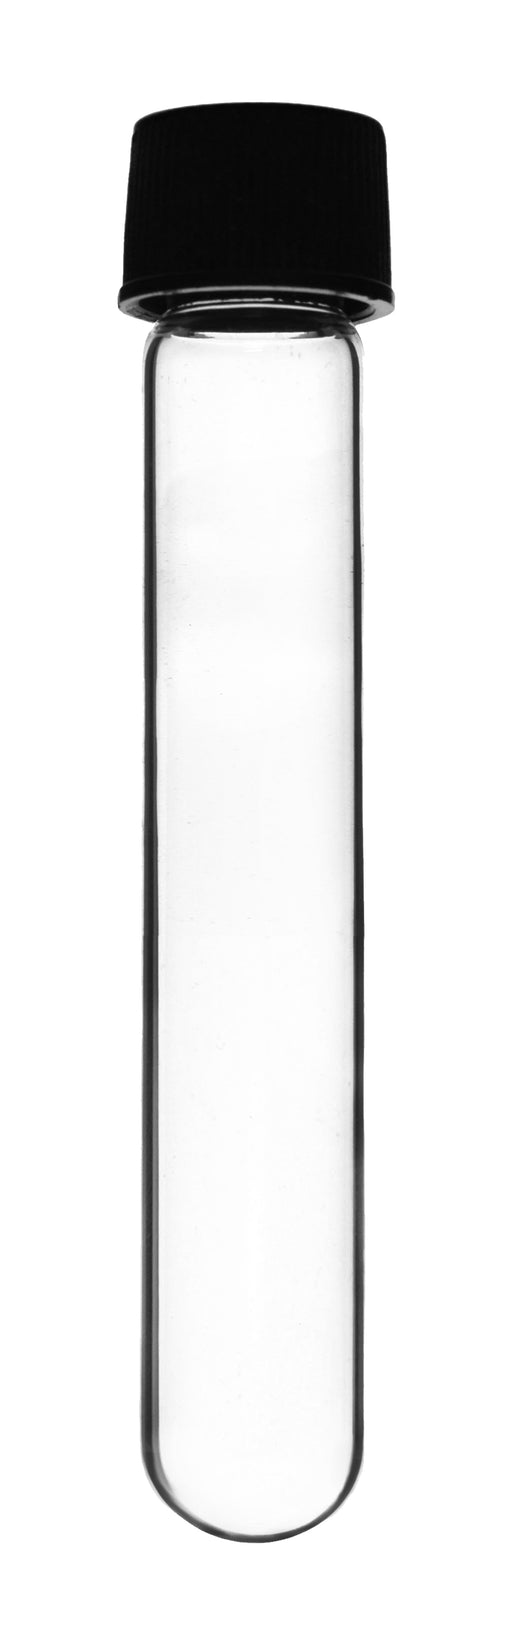 Culture Tube with Screw Cap, 30mL - 25x100mm - Round Bottom - Borosilicate Glass